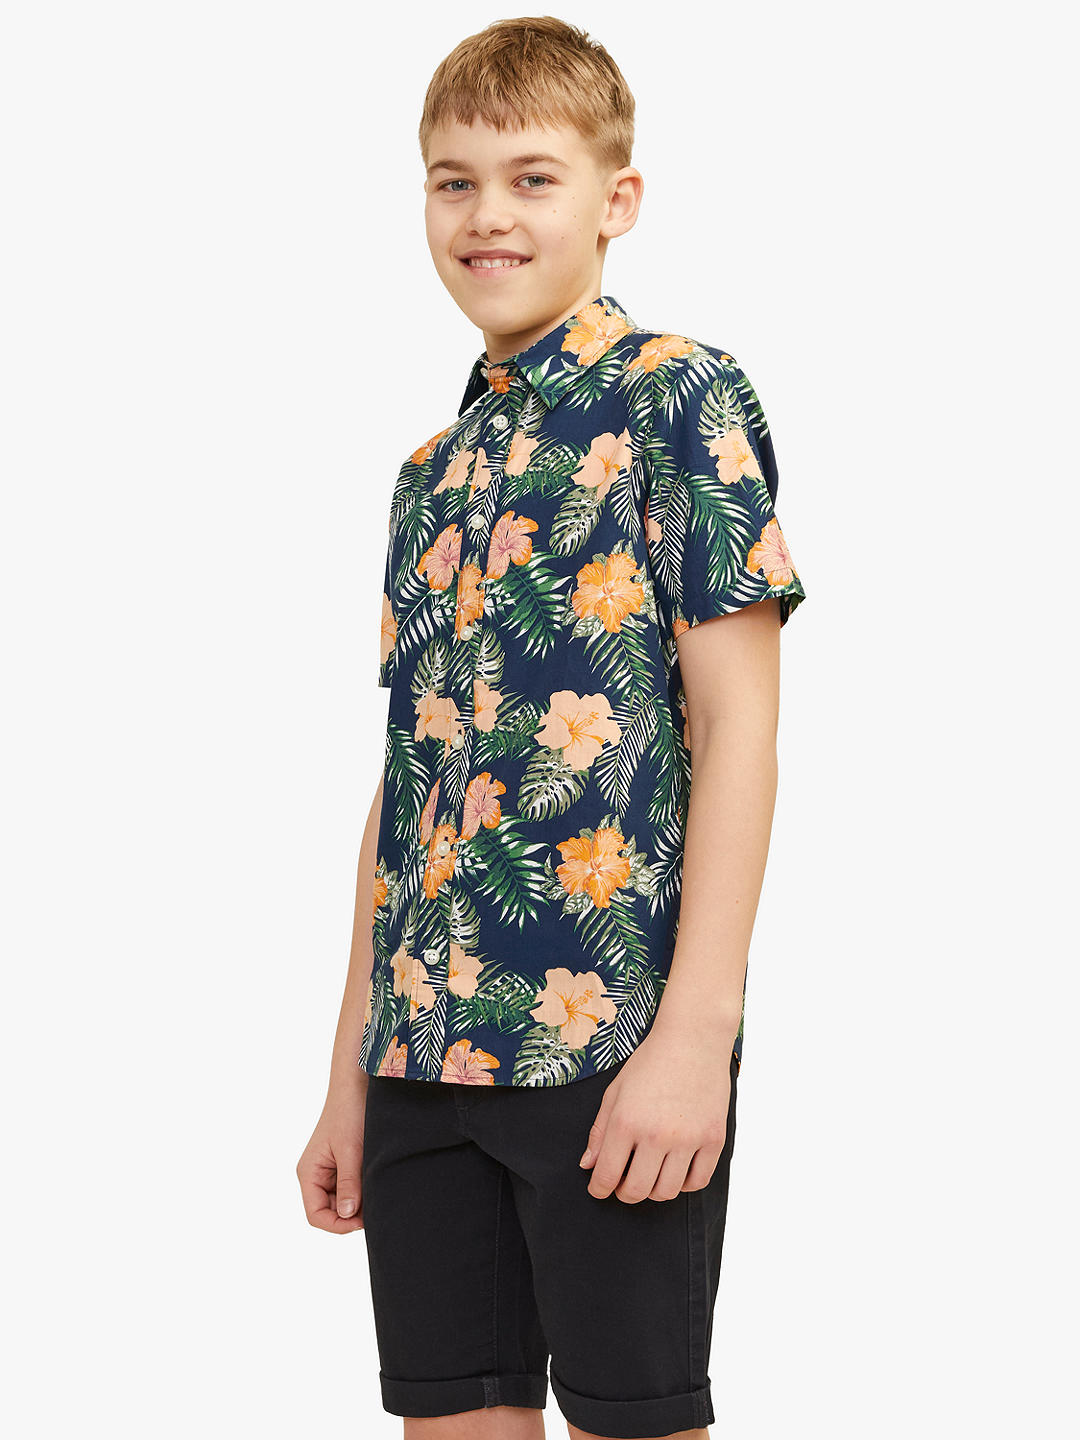 Jack & Jones Kids' Chill Floral Print Short Sleeve Shirt, Navy